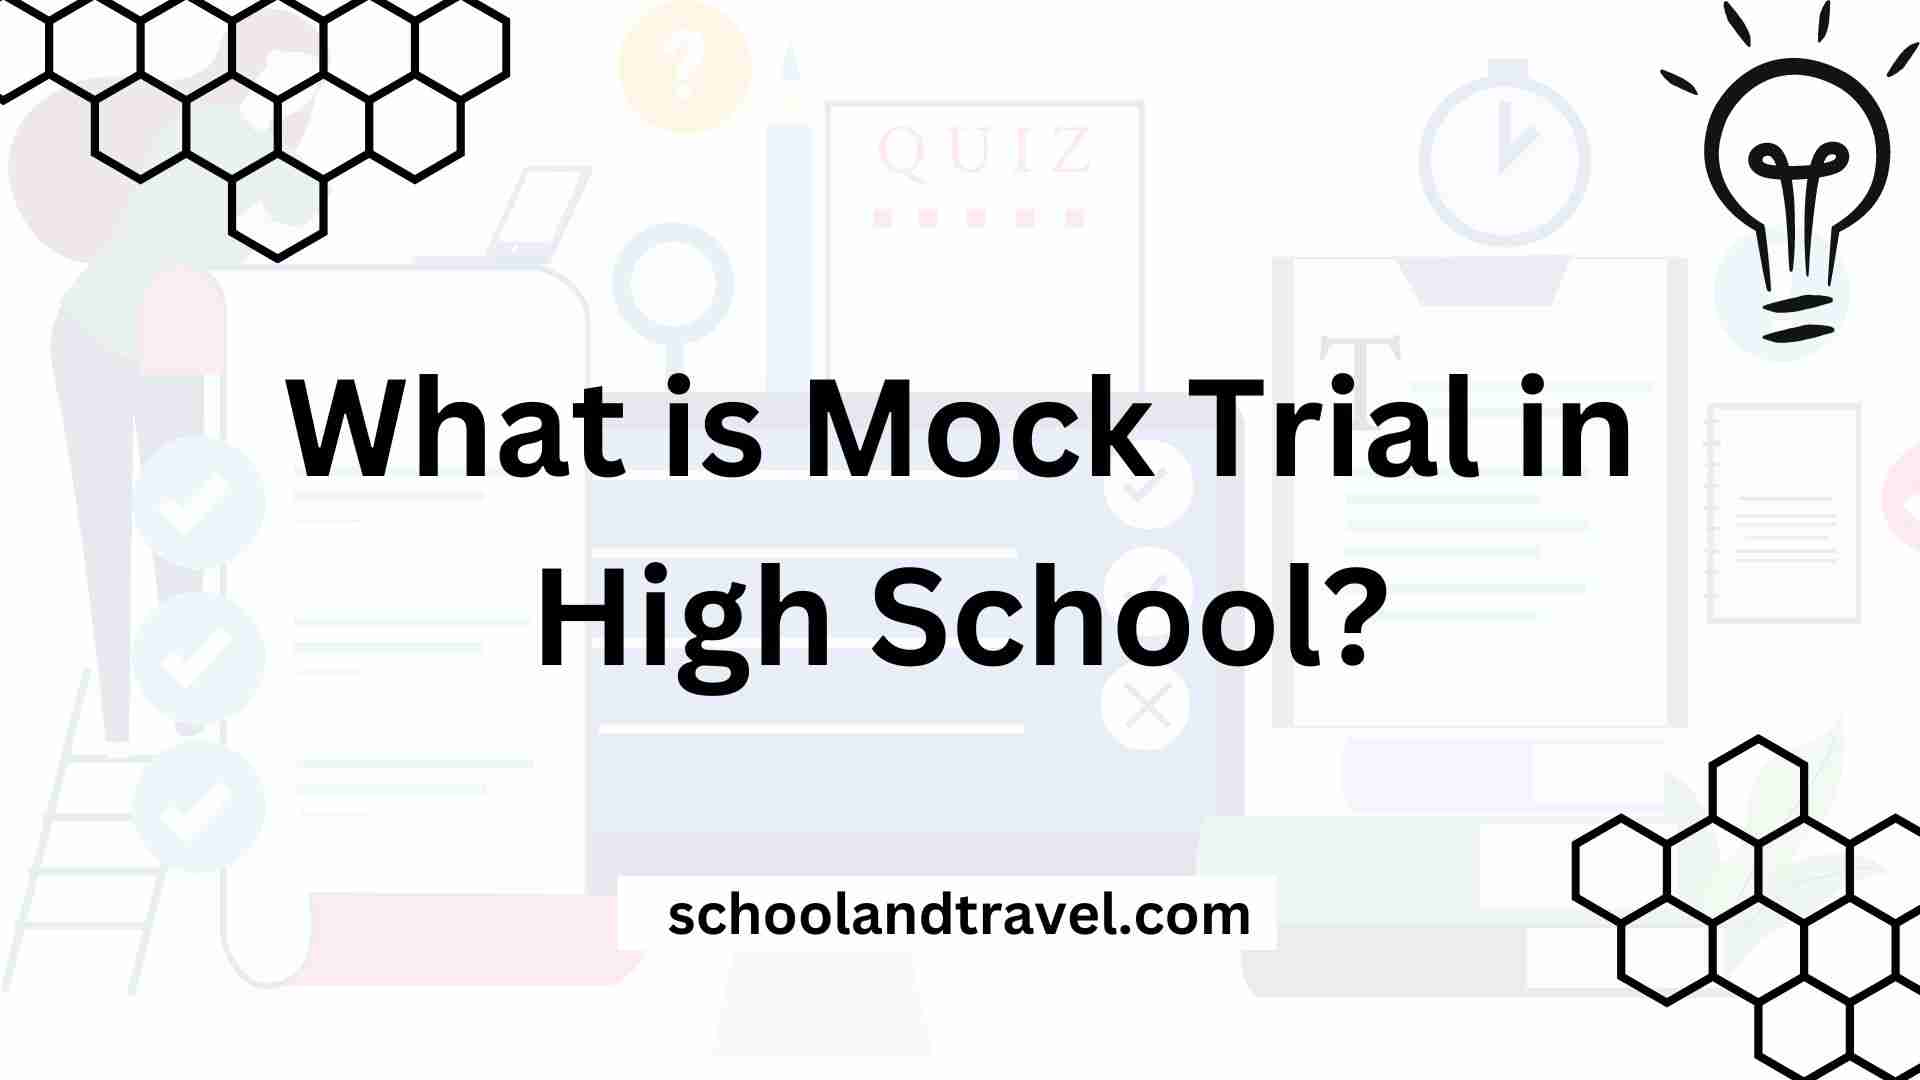 What is Mock Trial in High School?